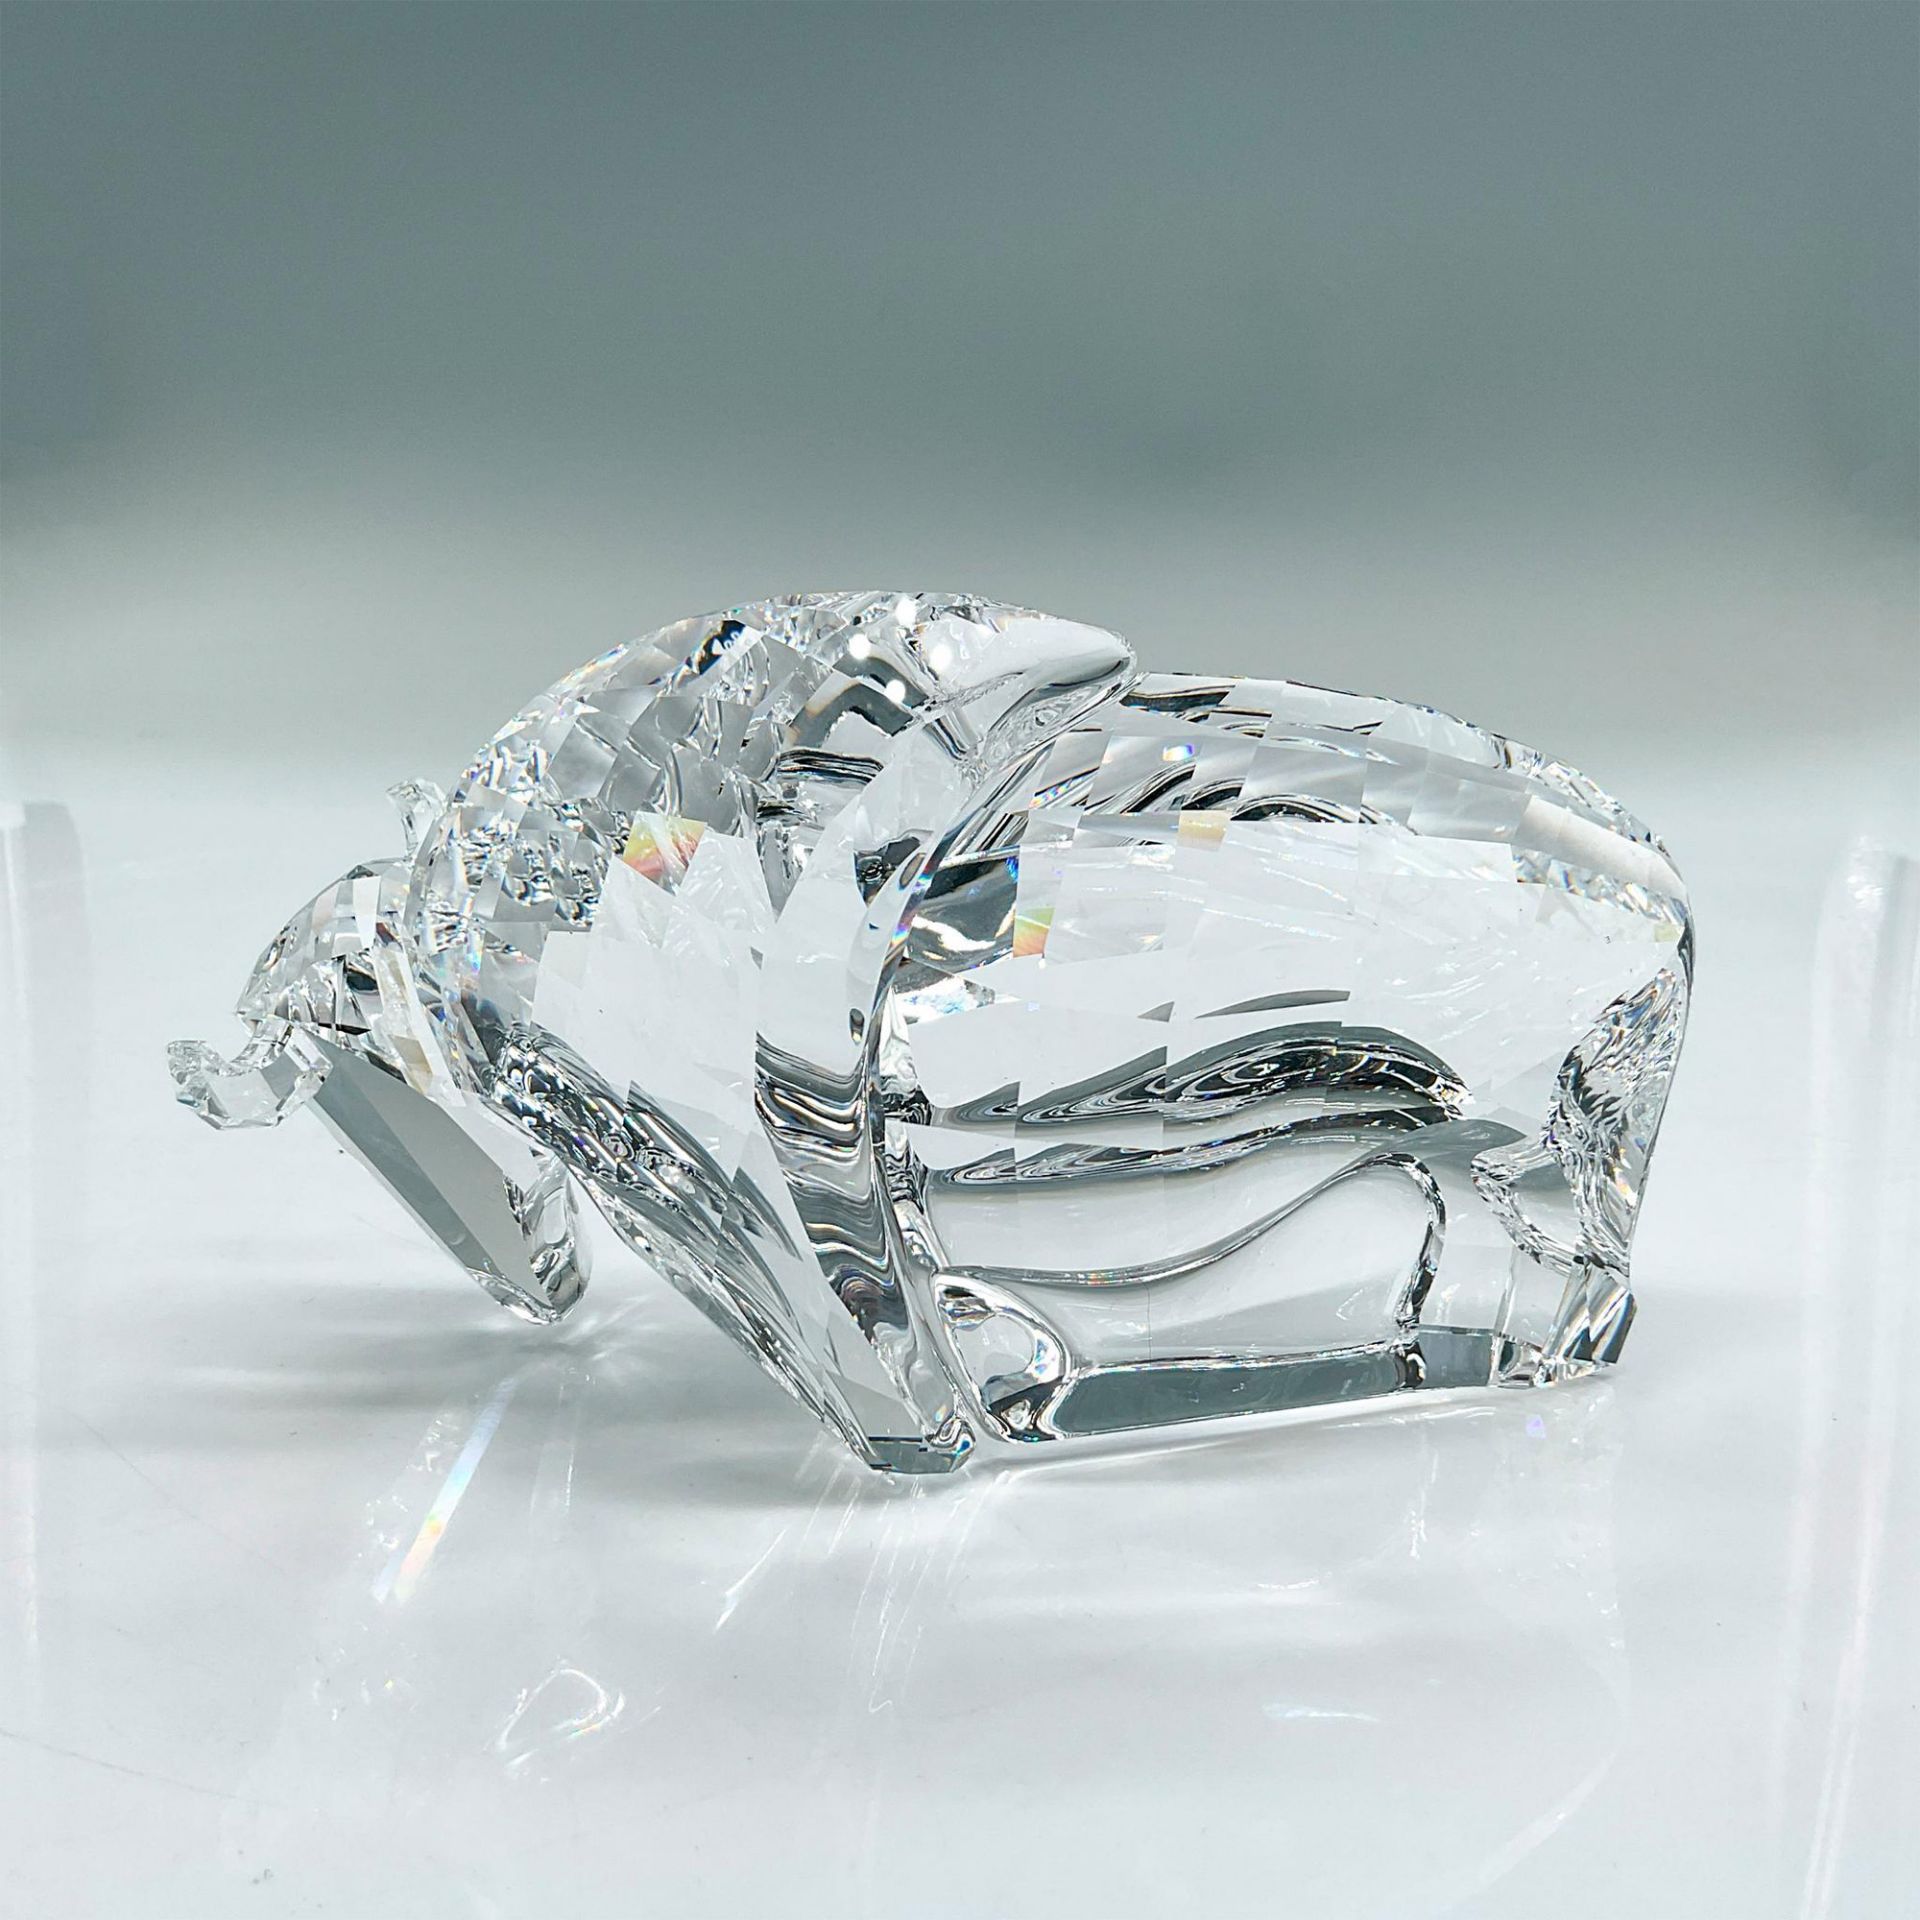 Swarovski Silver Crystal Figurine, The Buffalo - Image 2 of 4